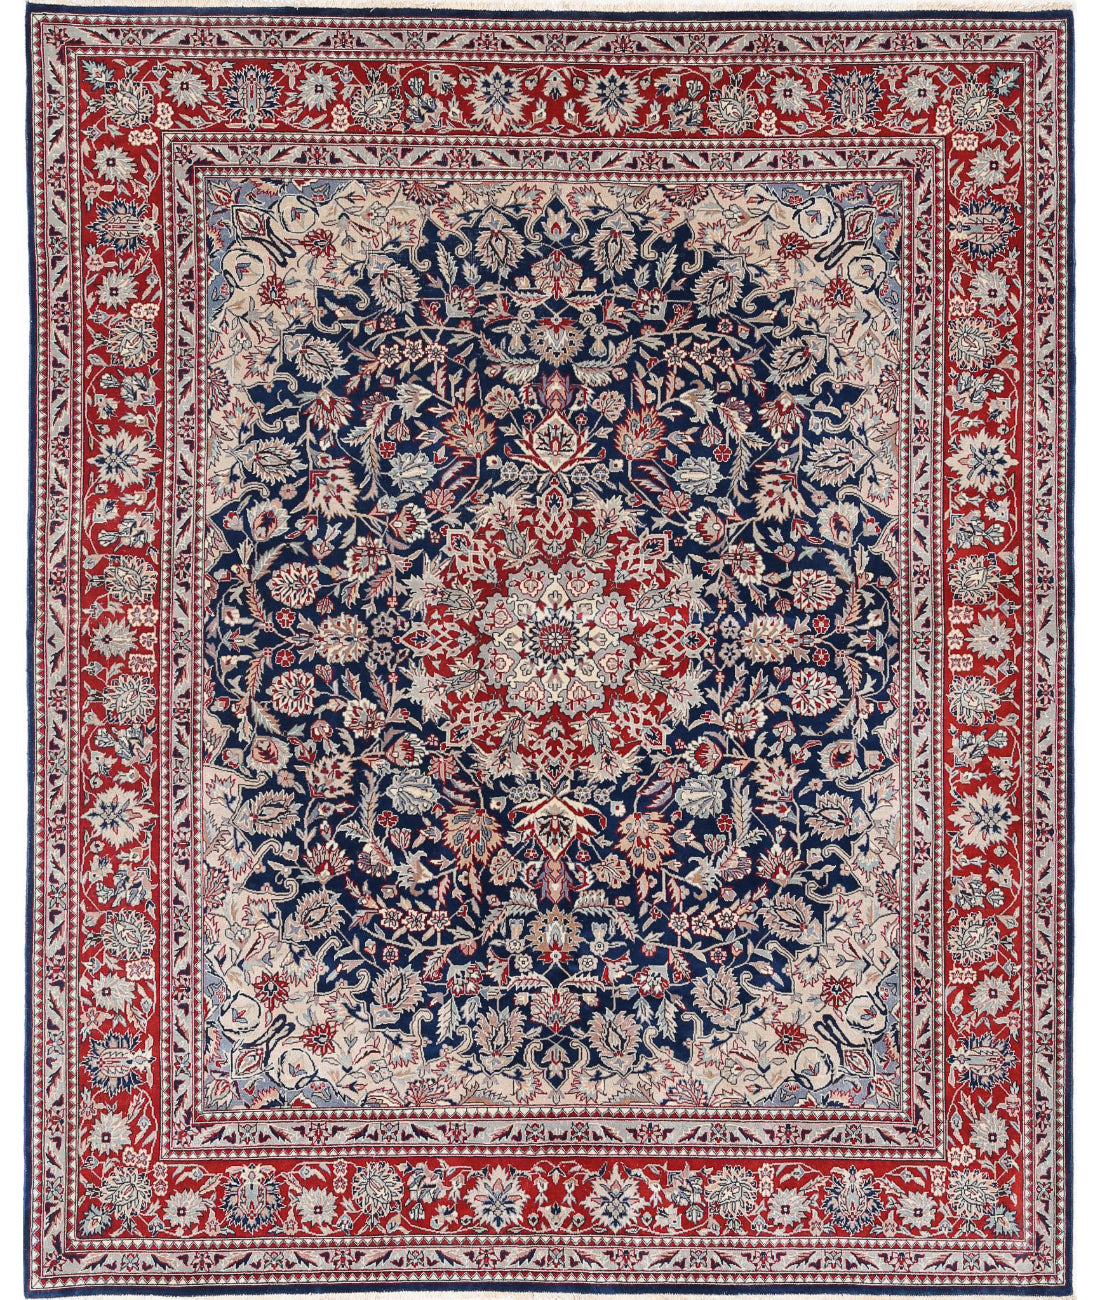 Heritage-hand-knotted-pak-persian-fine-wool-rug-5025211.jpg